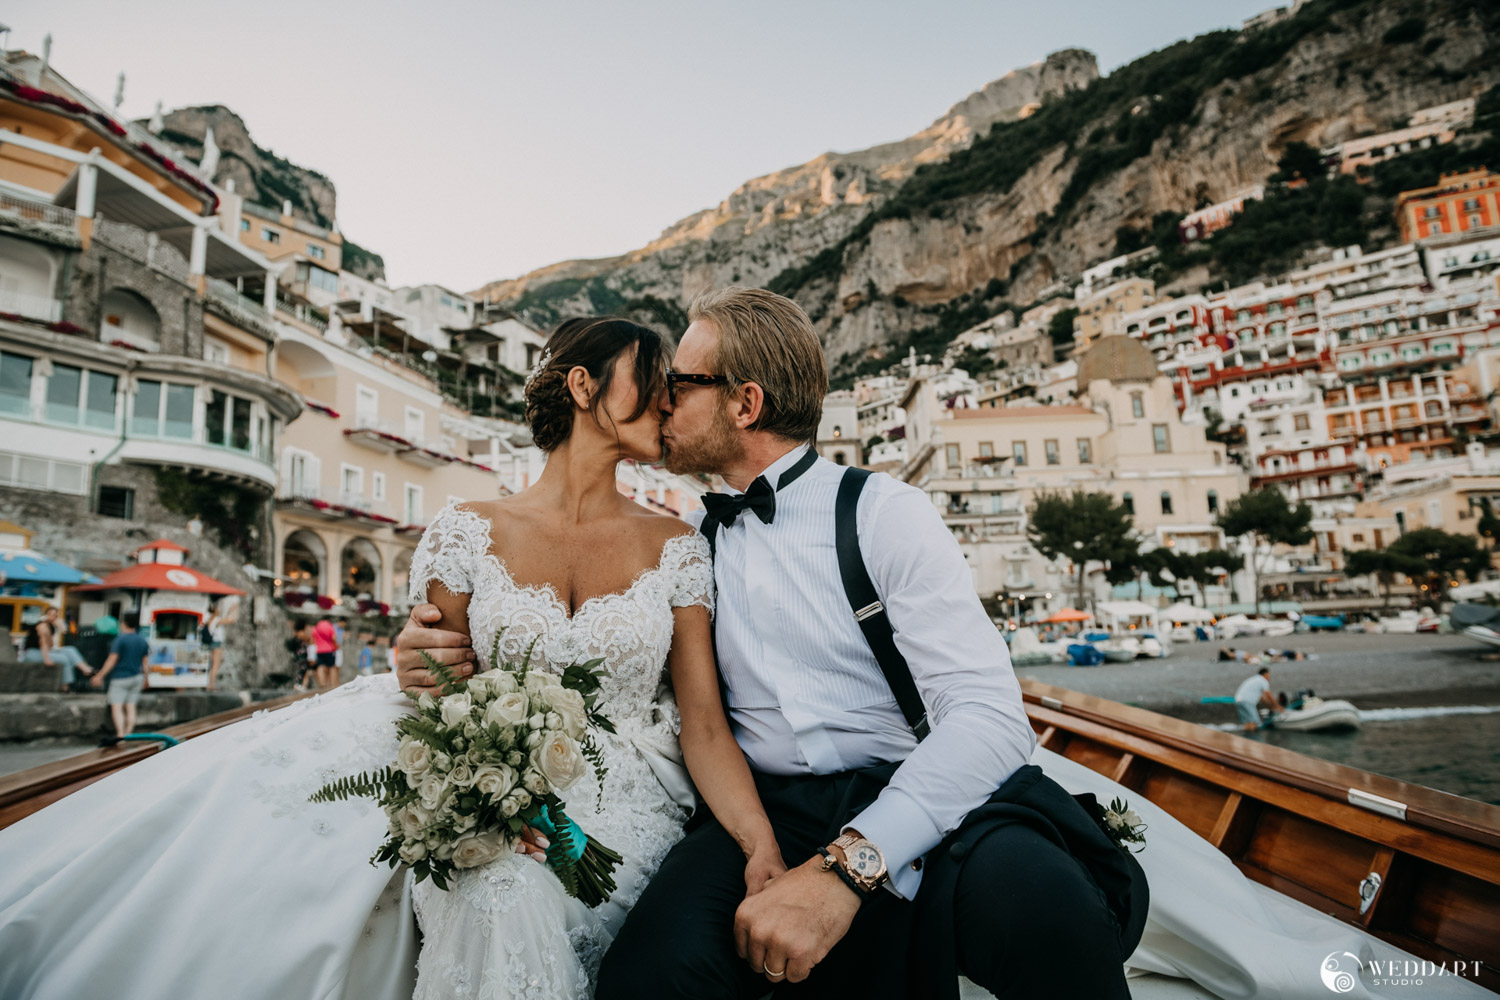 Luxury Wedding - Amalfi Coast - Destination Wedding Photographers and Videographers - Wedding Reportage - Weddart Studio - Giuseppe De Angelis - Simone Olivieri